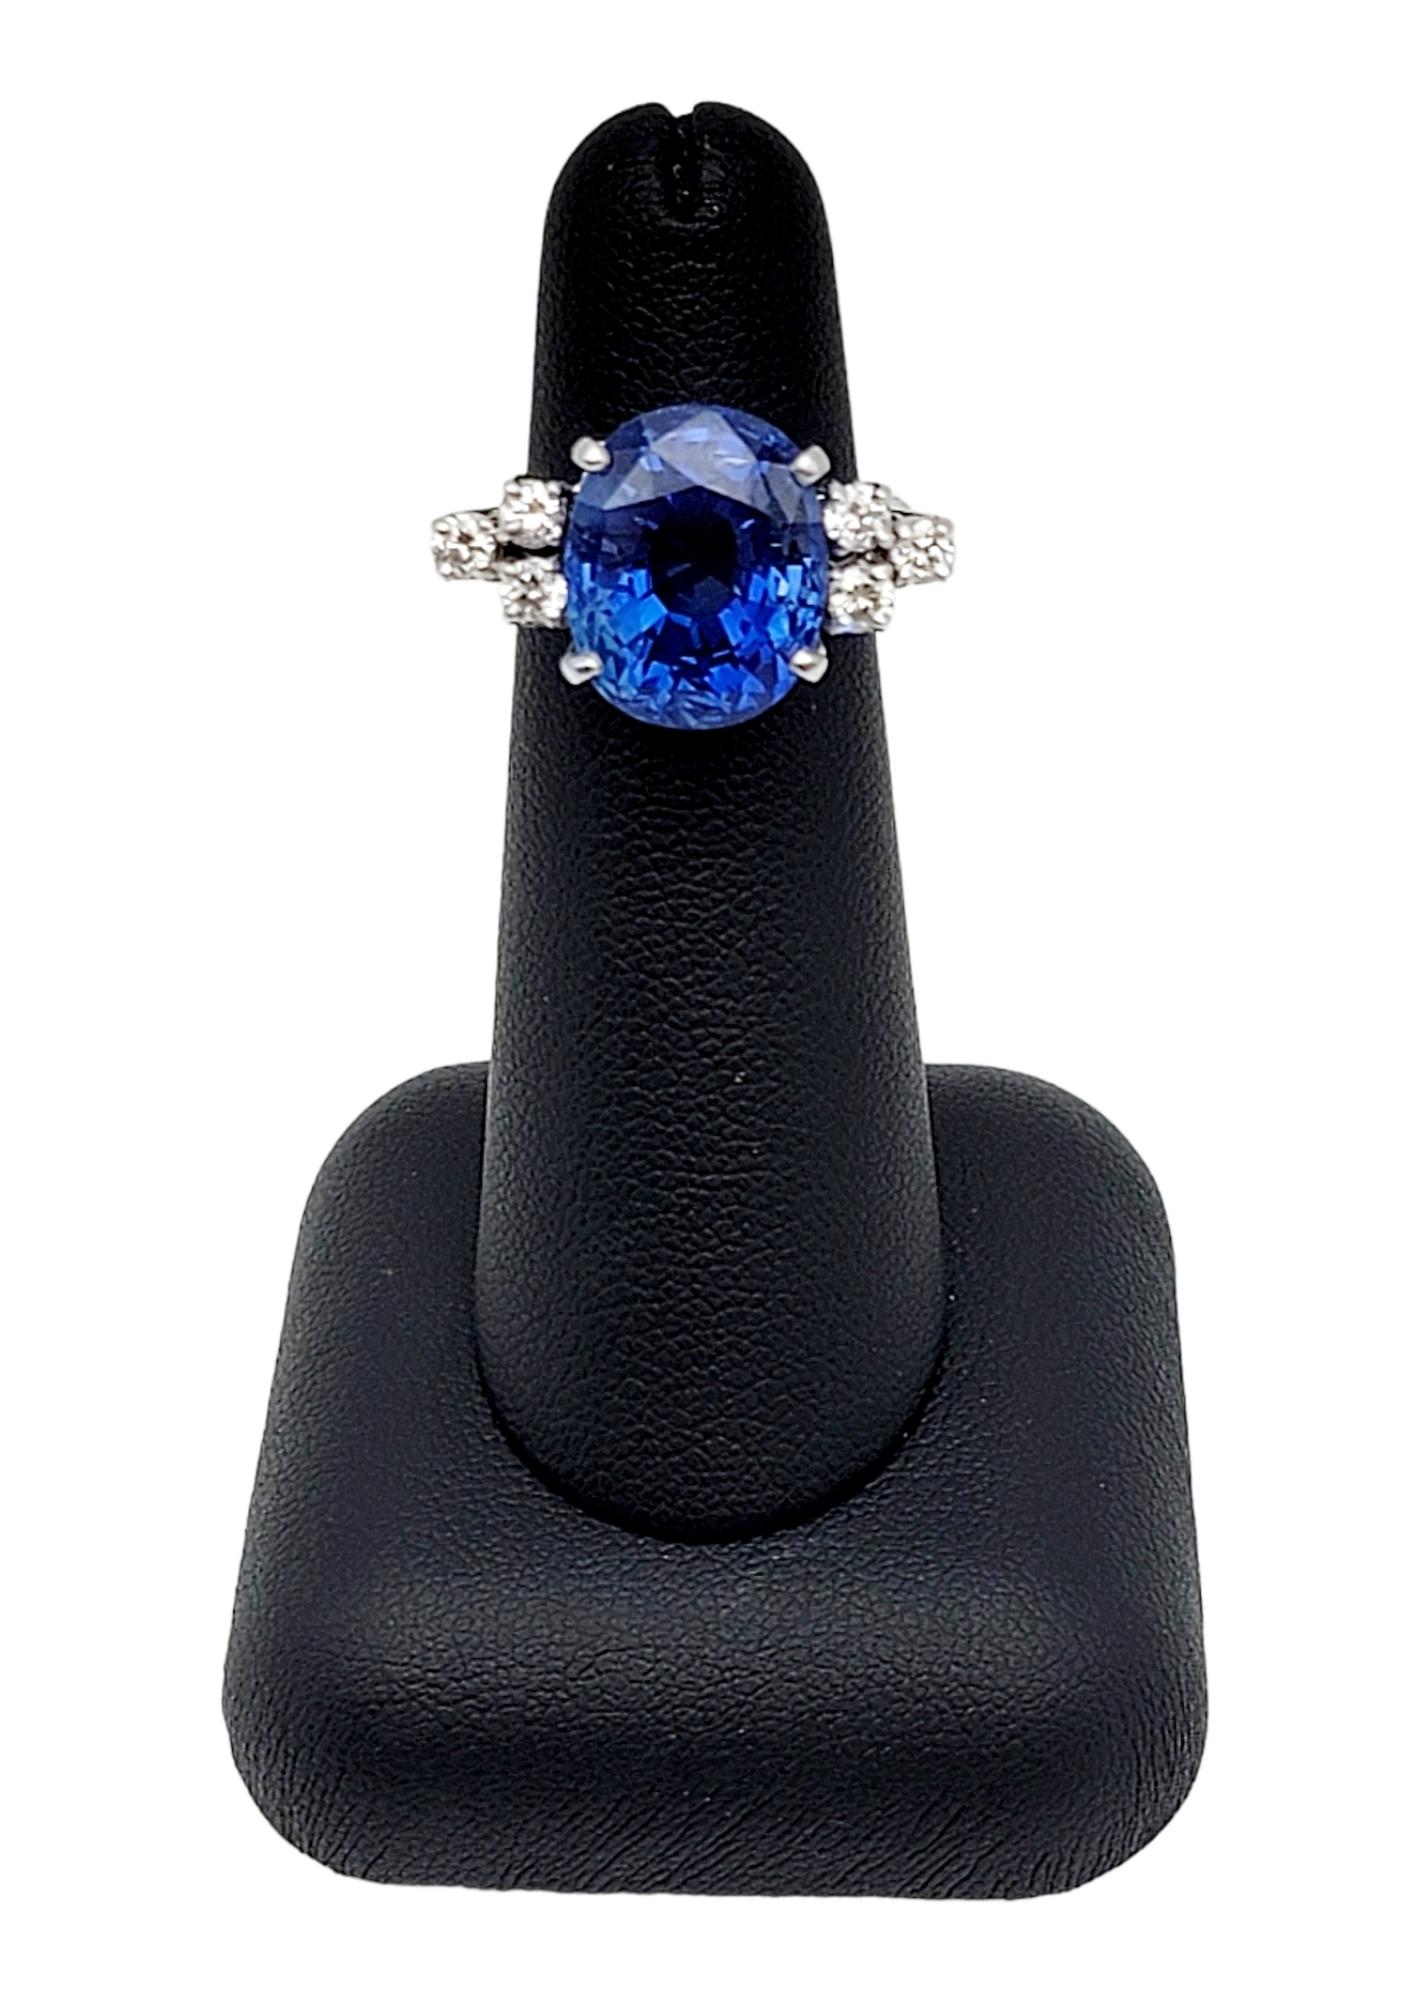 Impressive 15.35 Carat Rare Untreated Oval Ceylon Sapphire and Diamond Ring For Sale 7